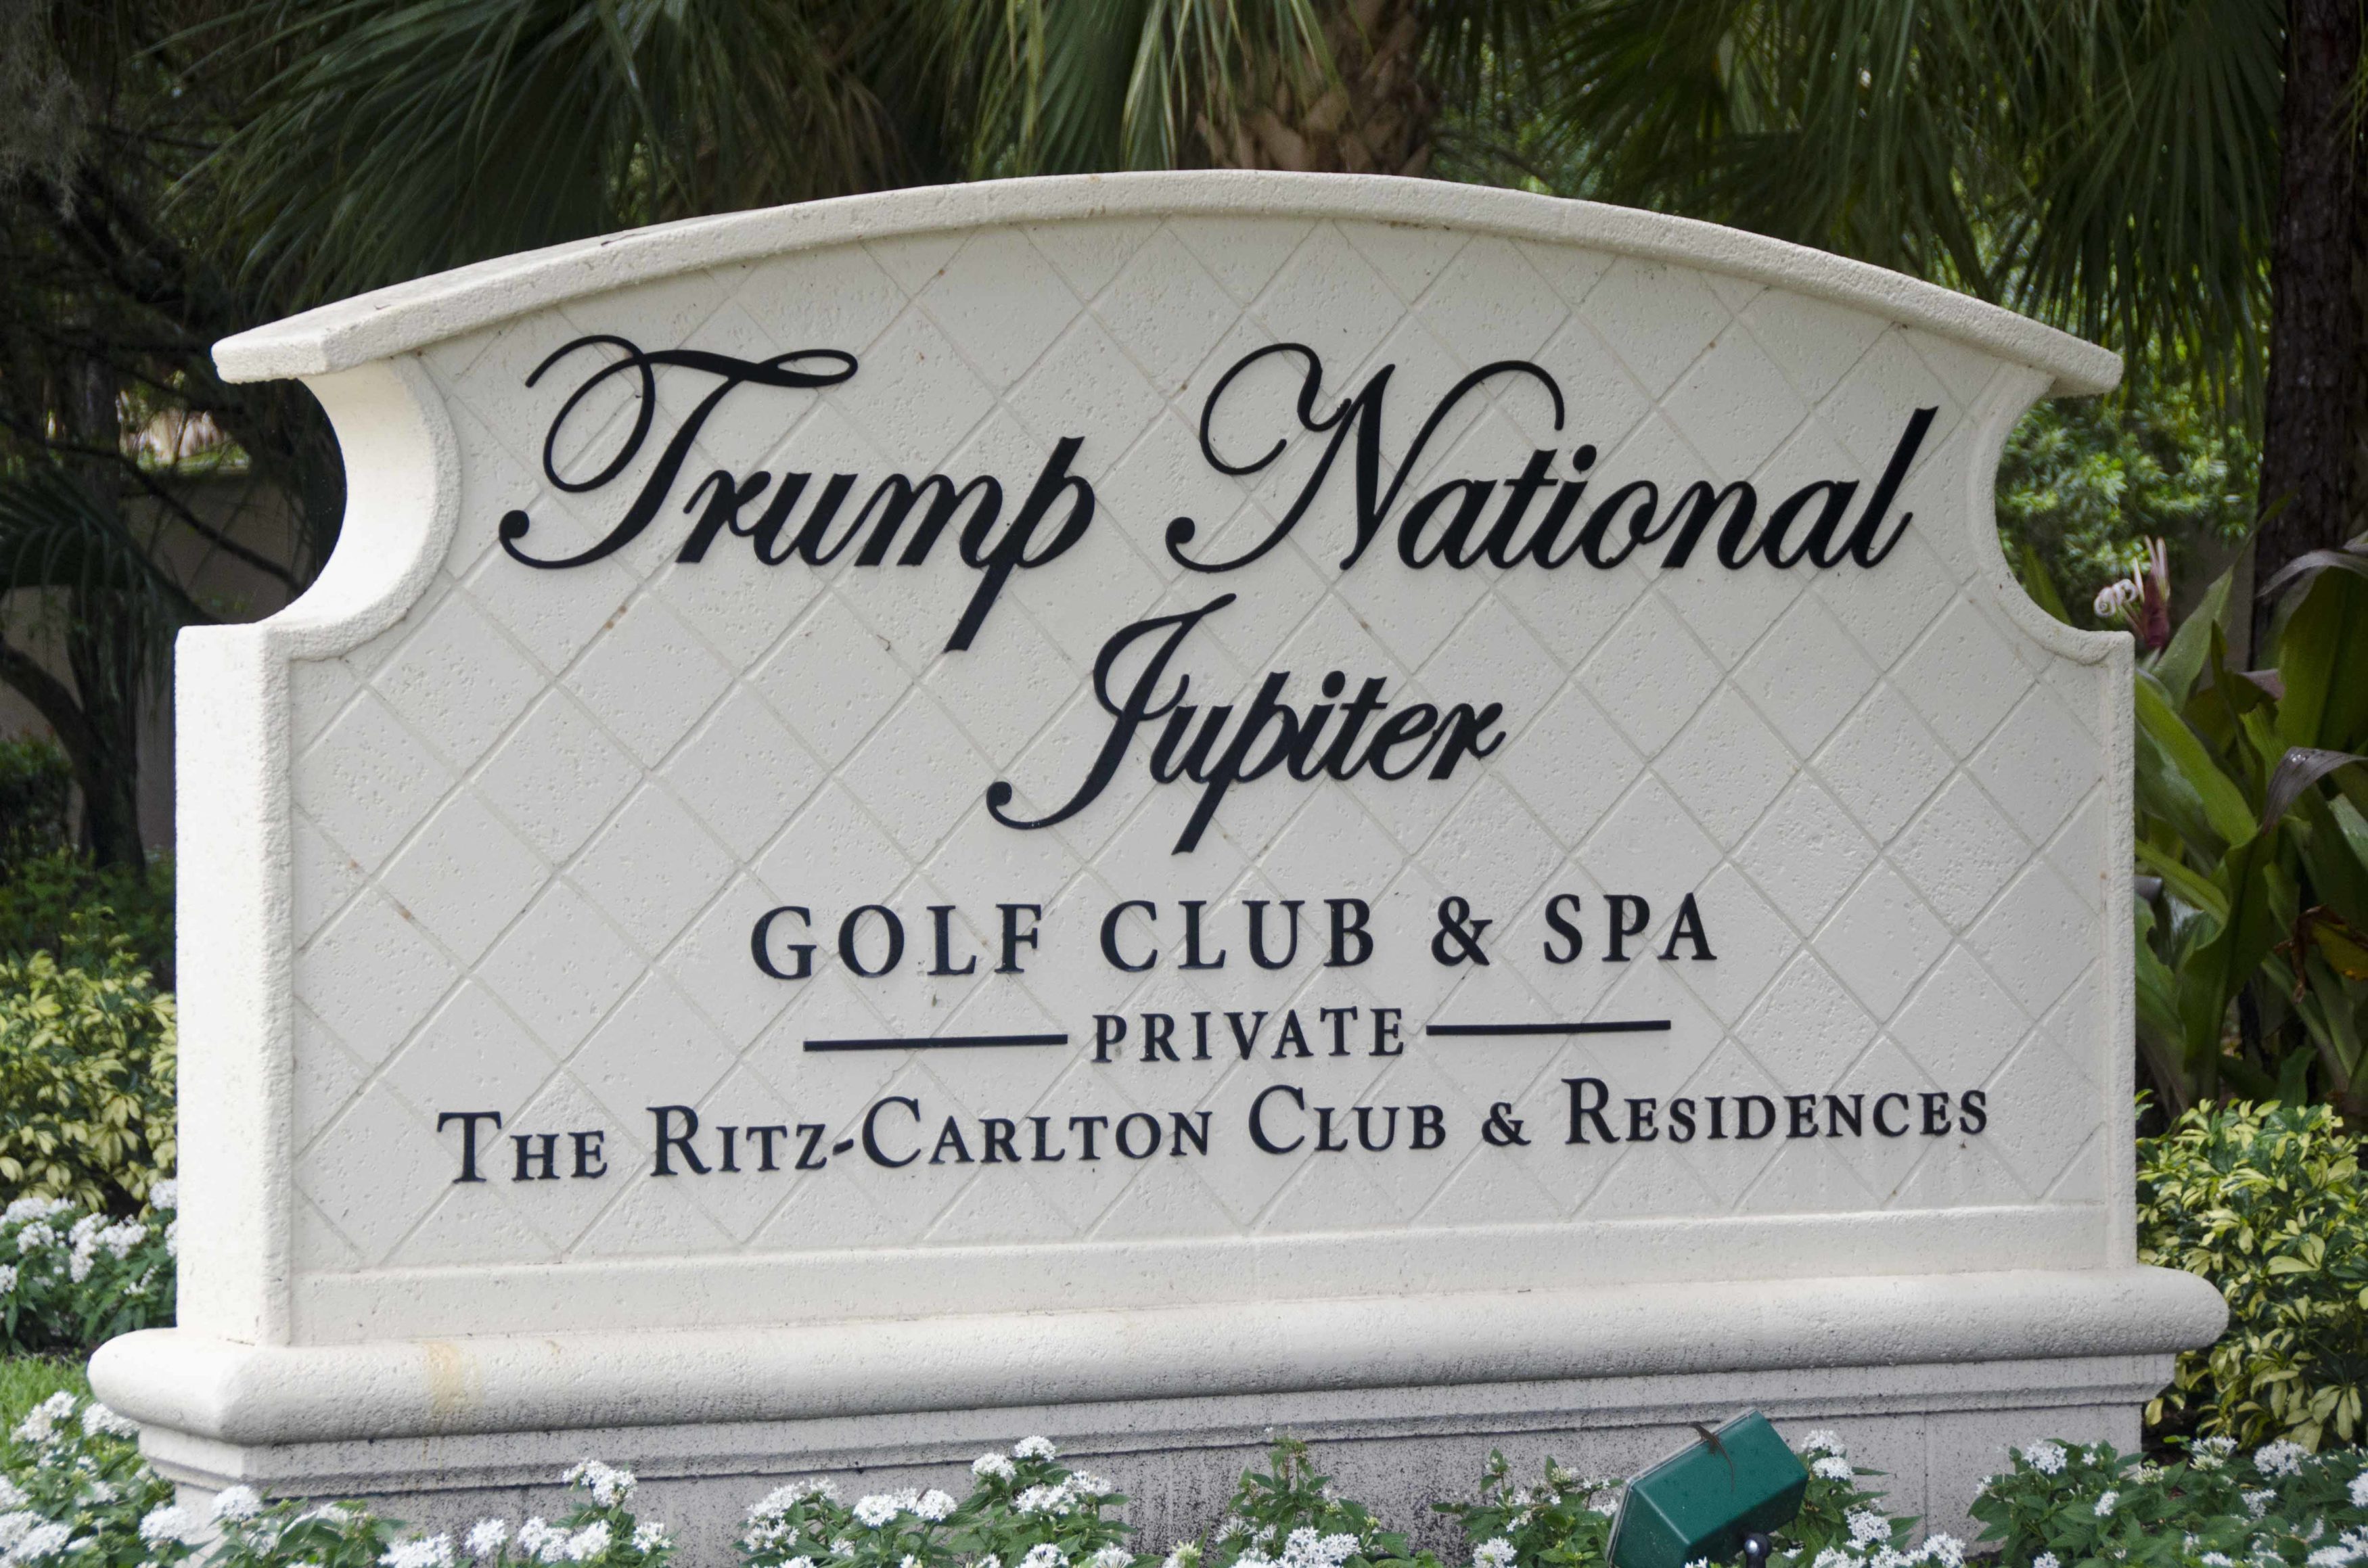 Trump-national-golf-course-Jupiter-3500x2318.jpg